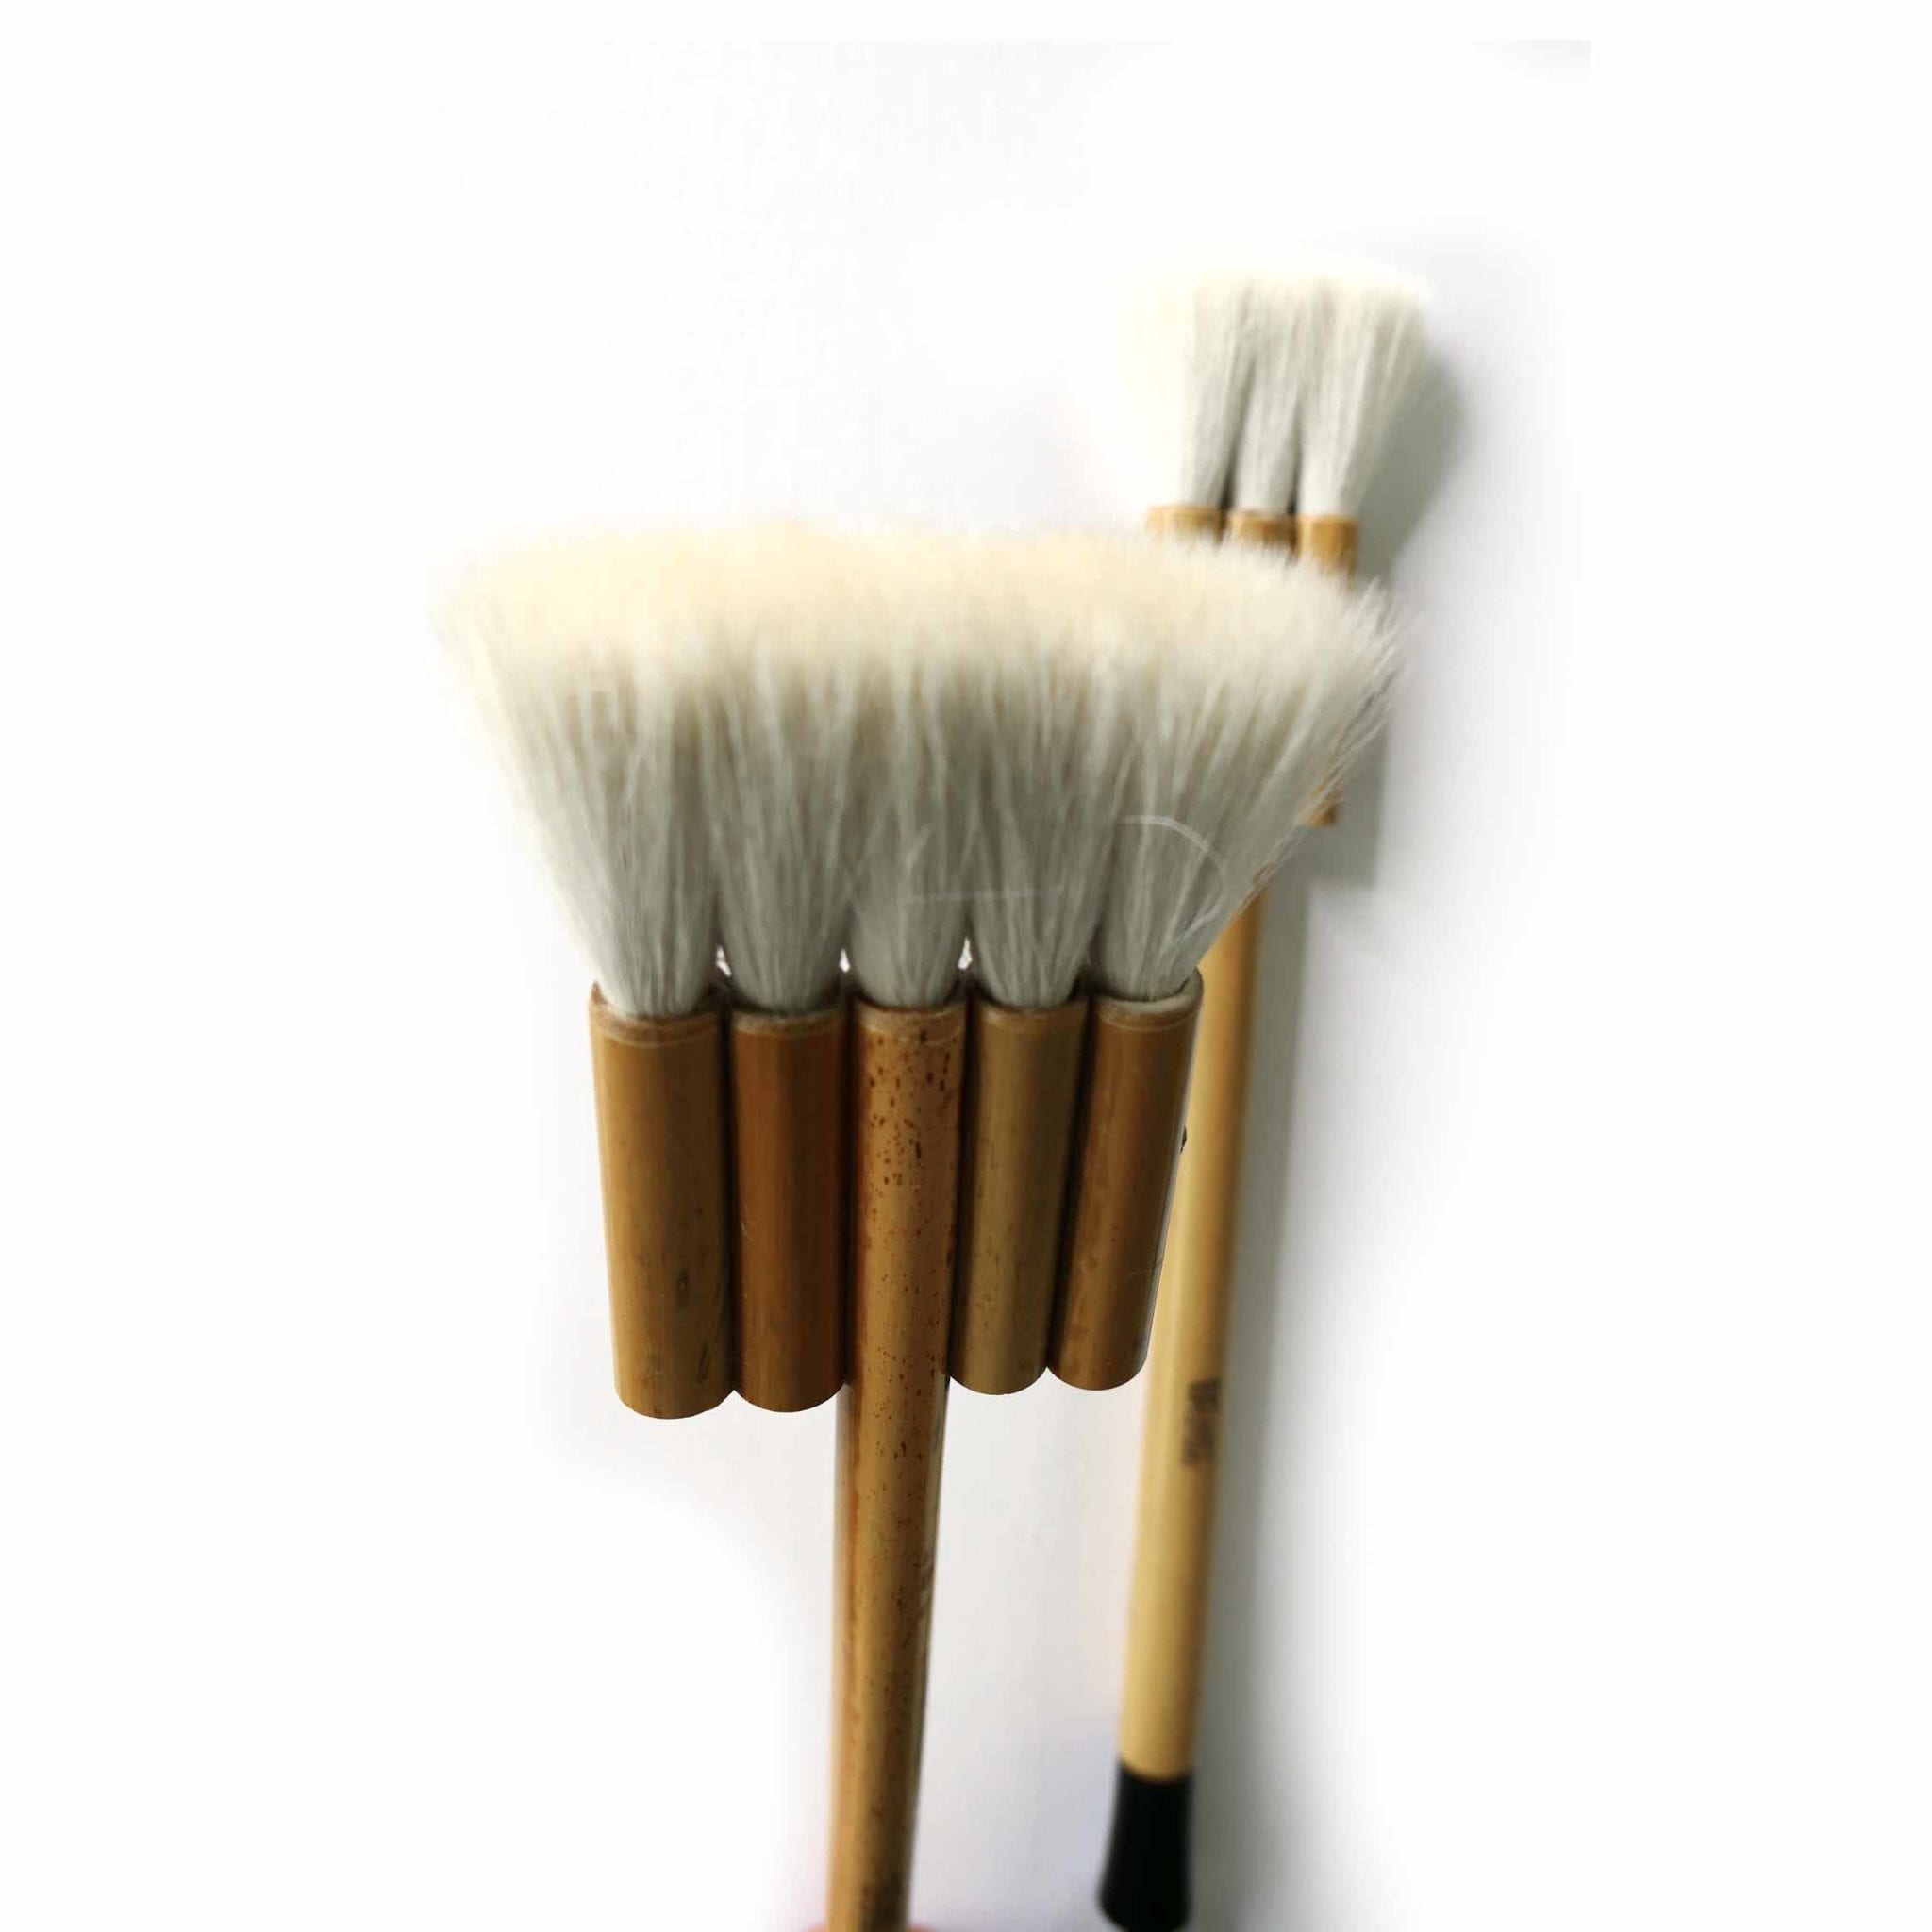 The Best Blending Brushes for Painting: Understanding Their